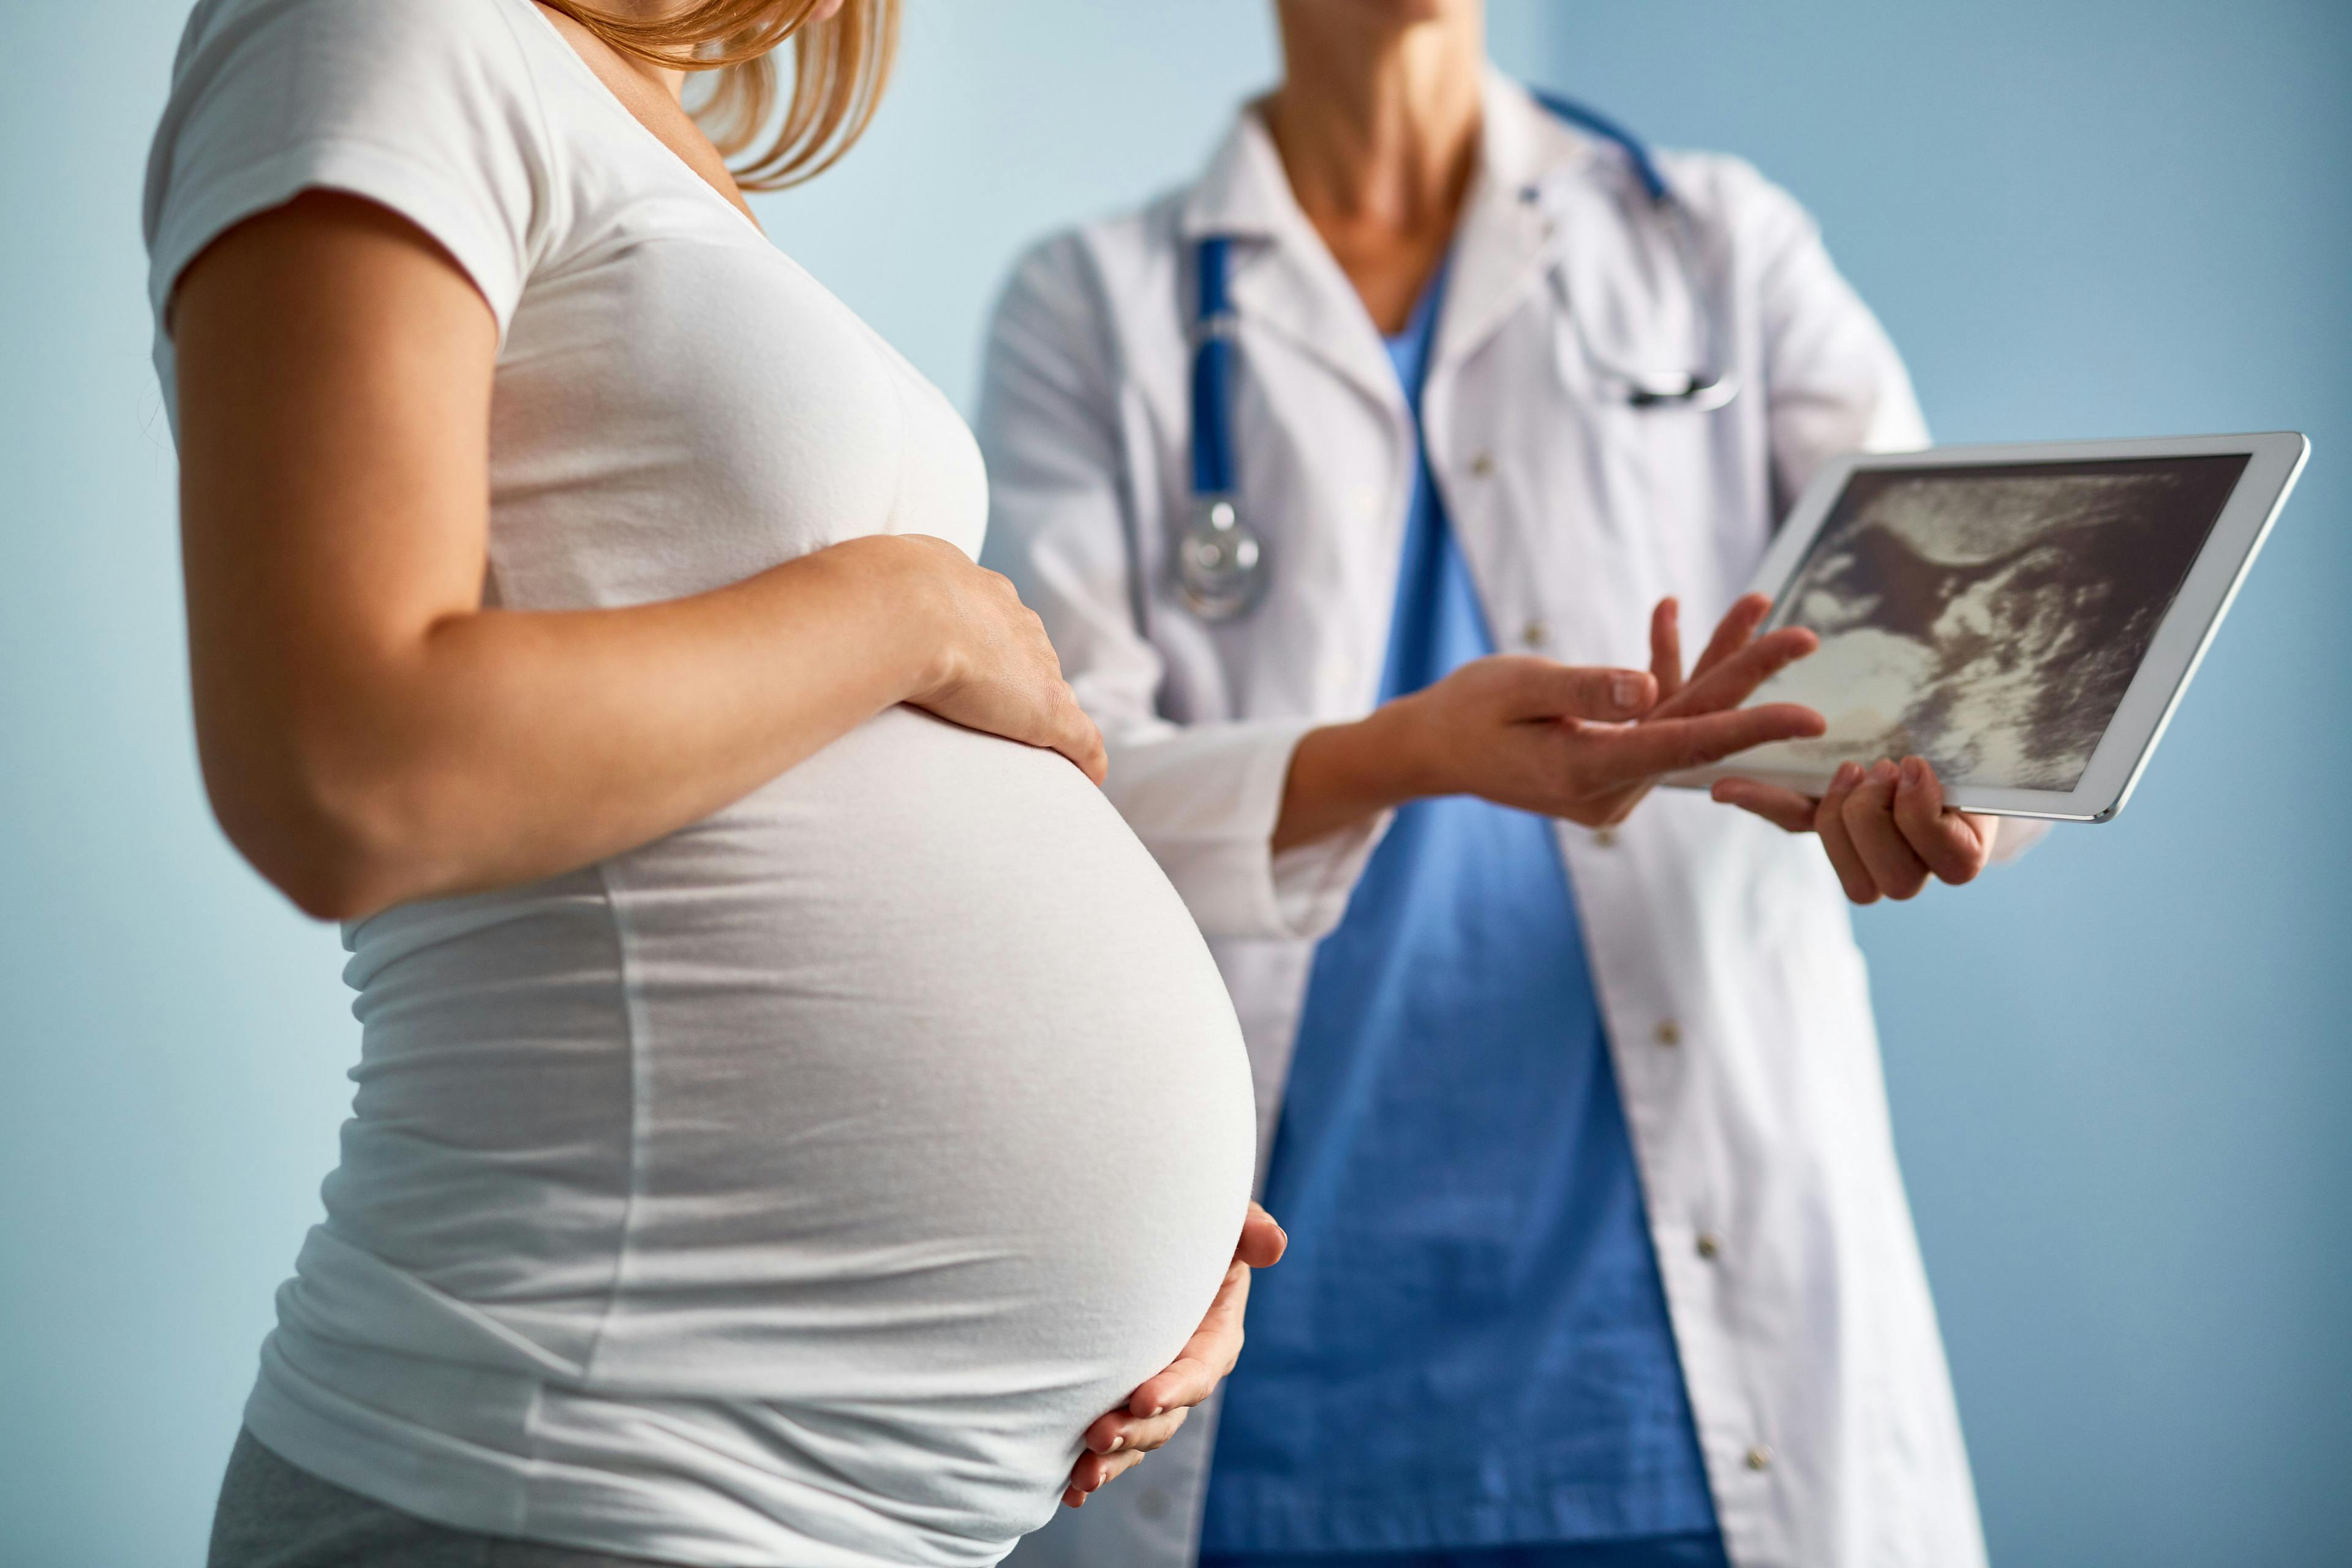 TXA for postpartum hemorrhage prevention after cesarean